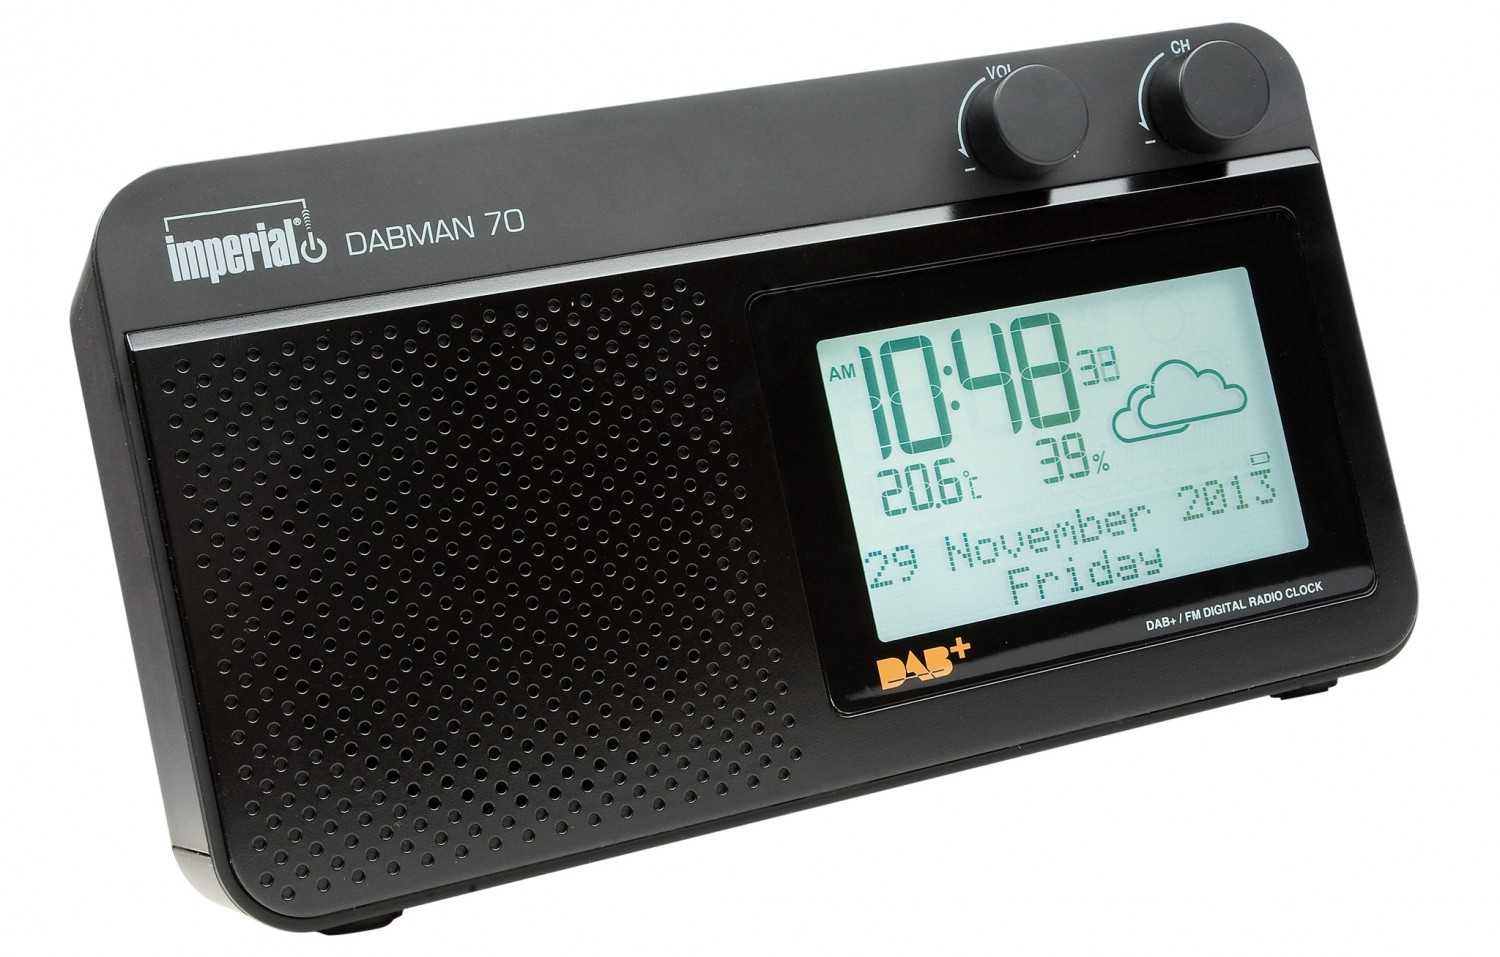 DAB+ Radio Digitalbox Imperial DABMAN70 im Test, Bild 2